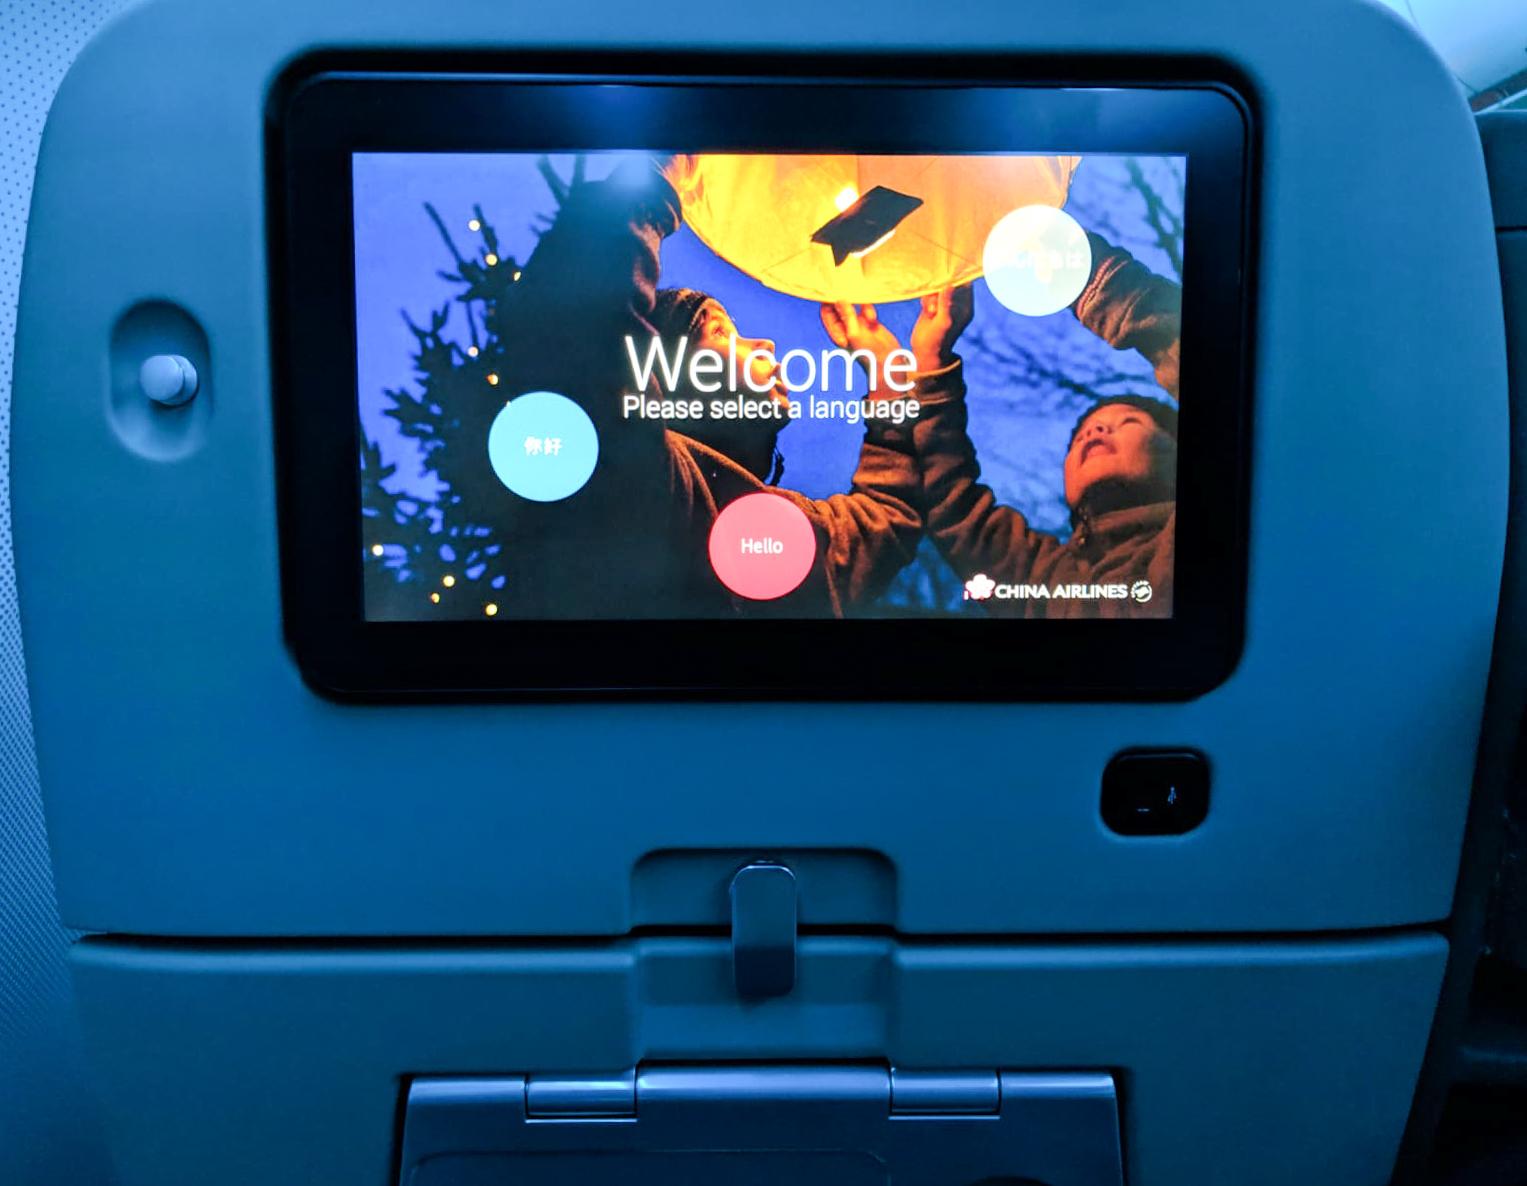 China Airlines Premium Economy seat screen